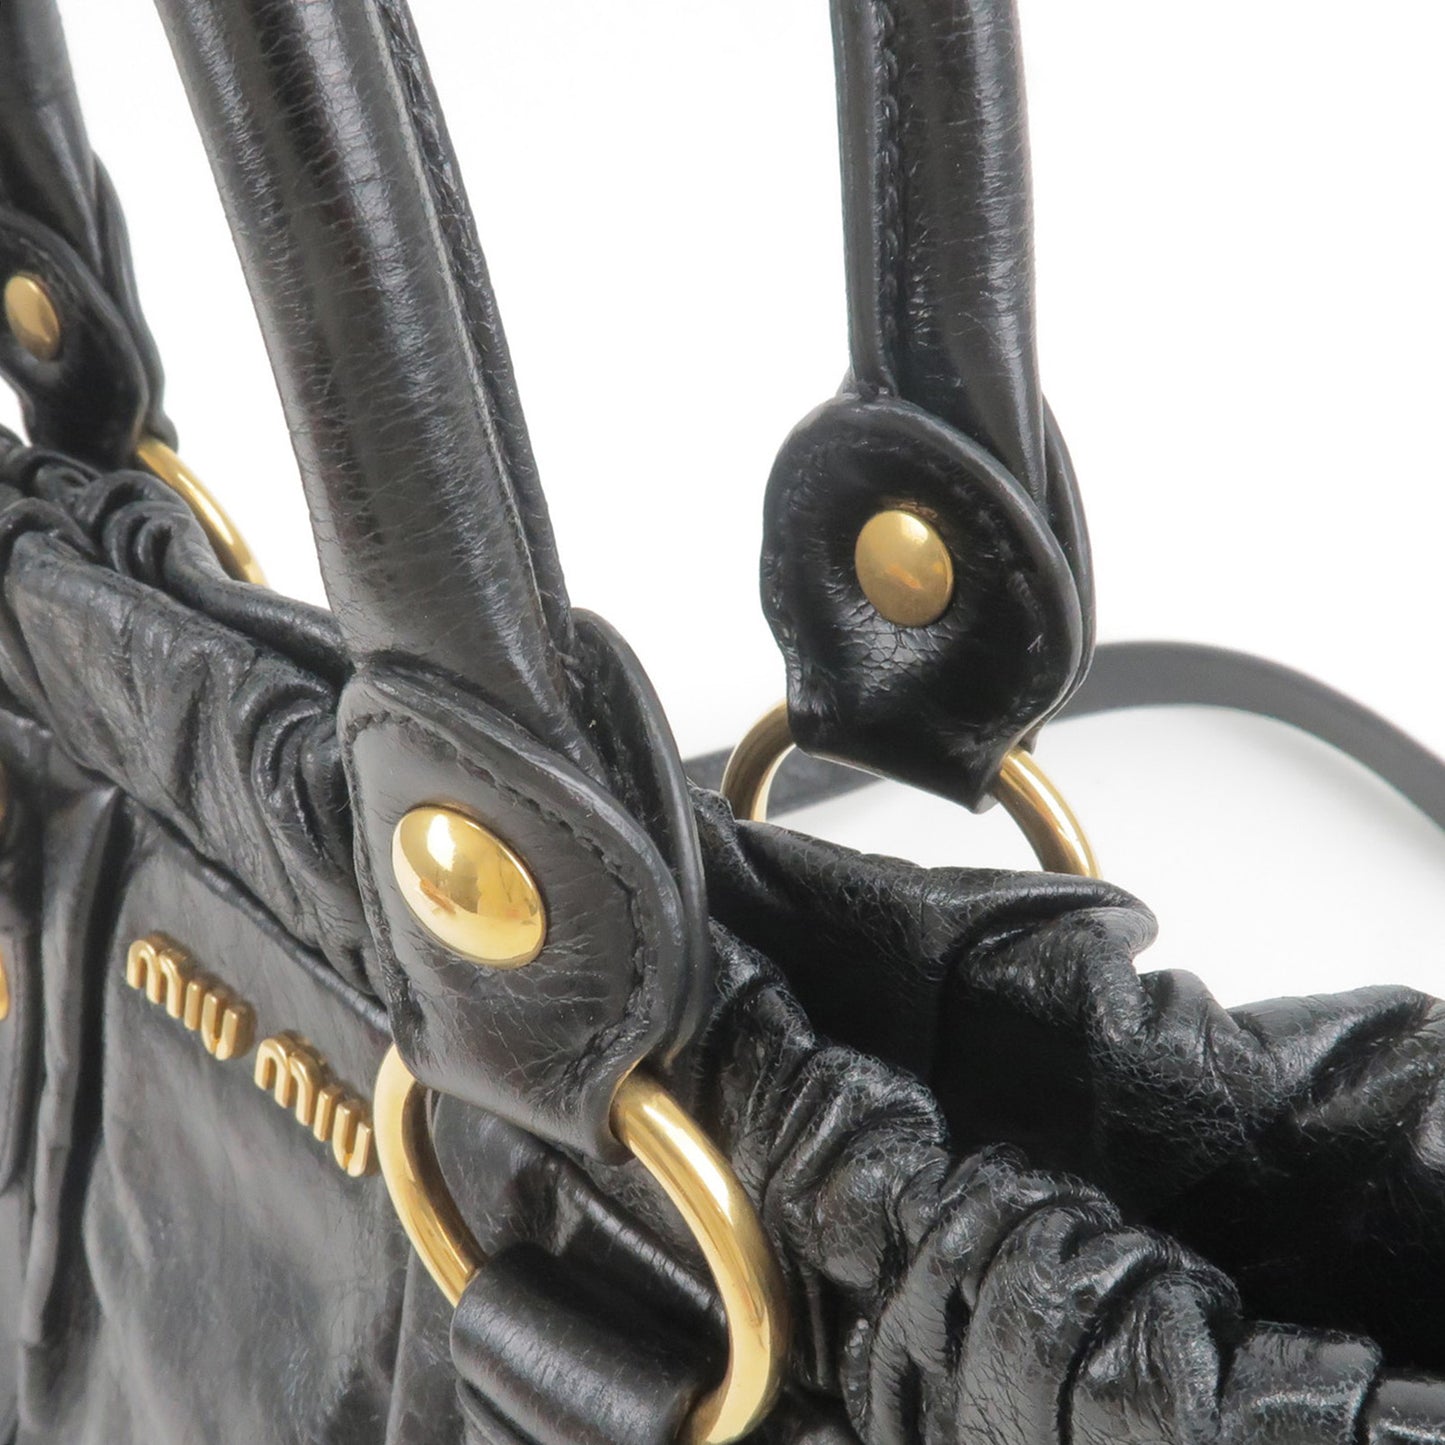 MIU MIU Logo Leather 2Way Shoulder Bag Hand Bag NERO Black